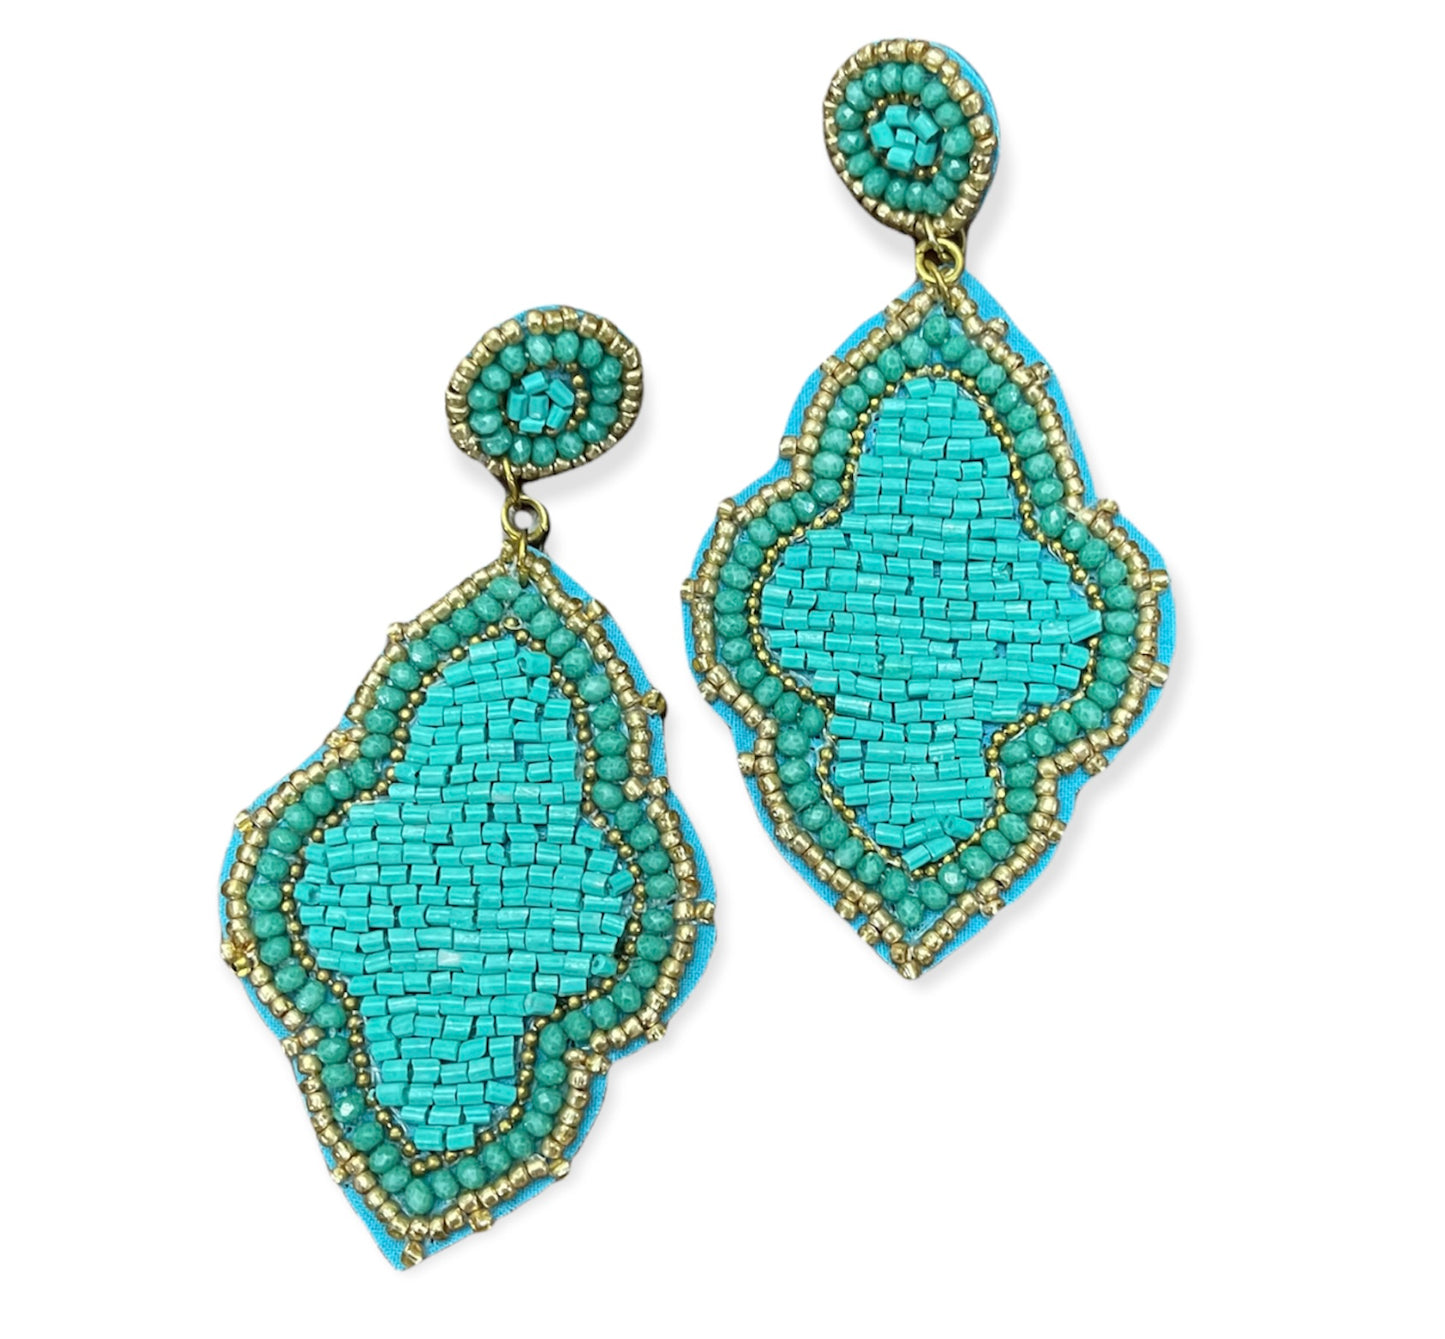 Moroccan Shaped Beaded Earrings - 3 colors